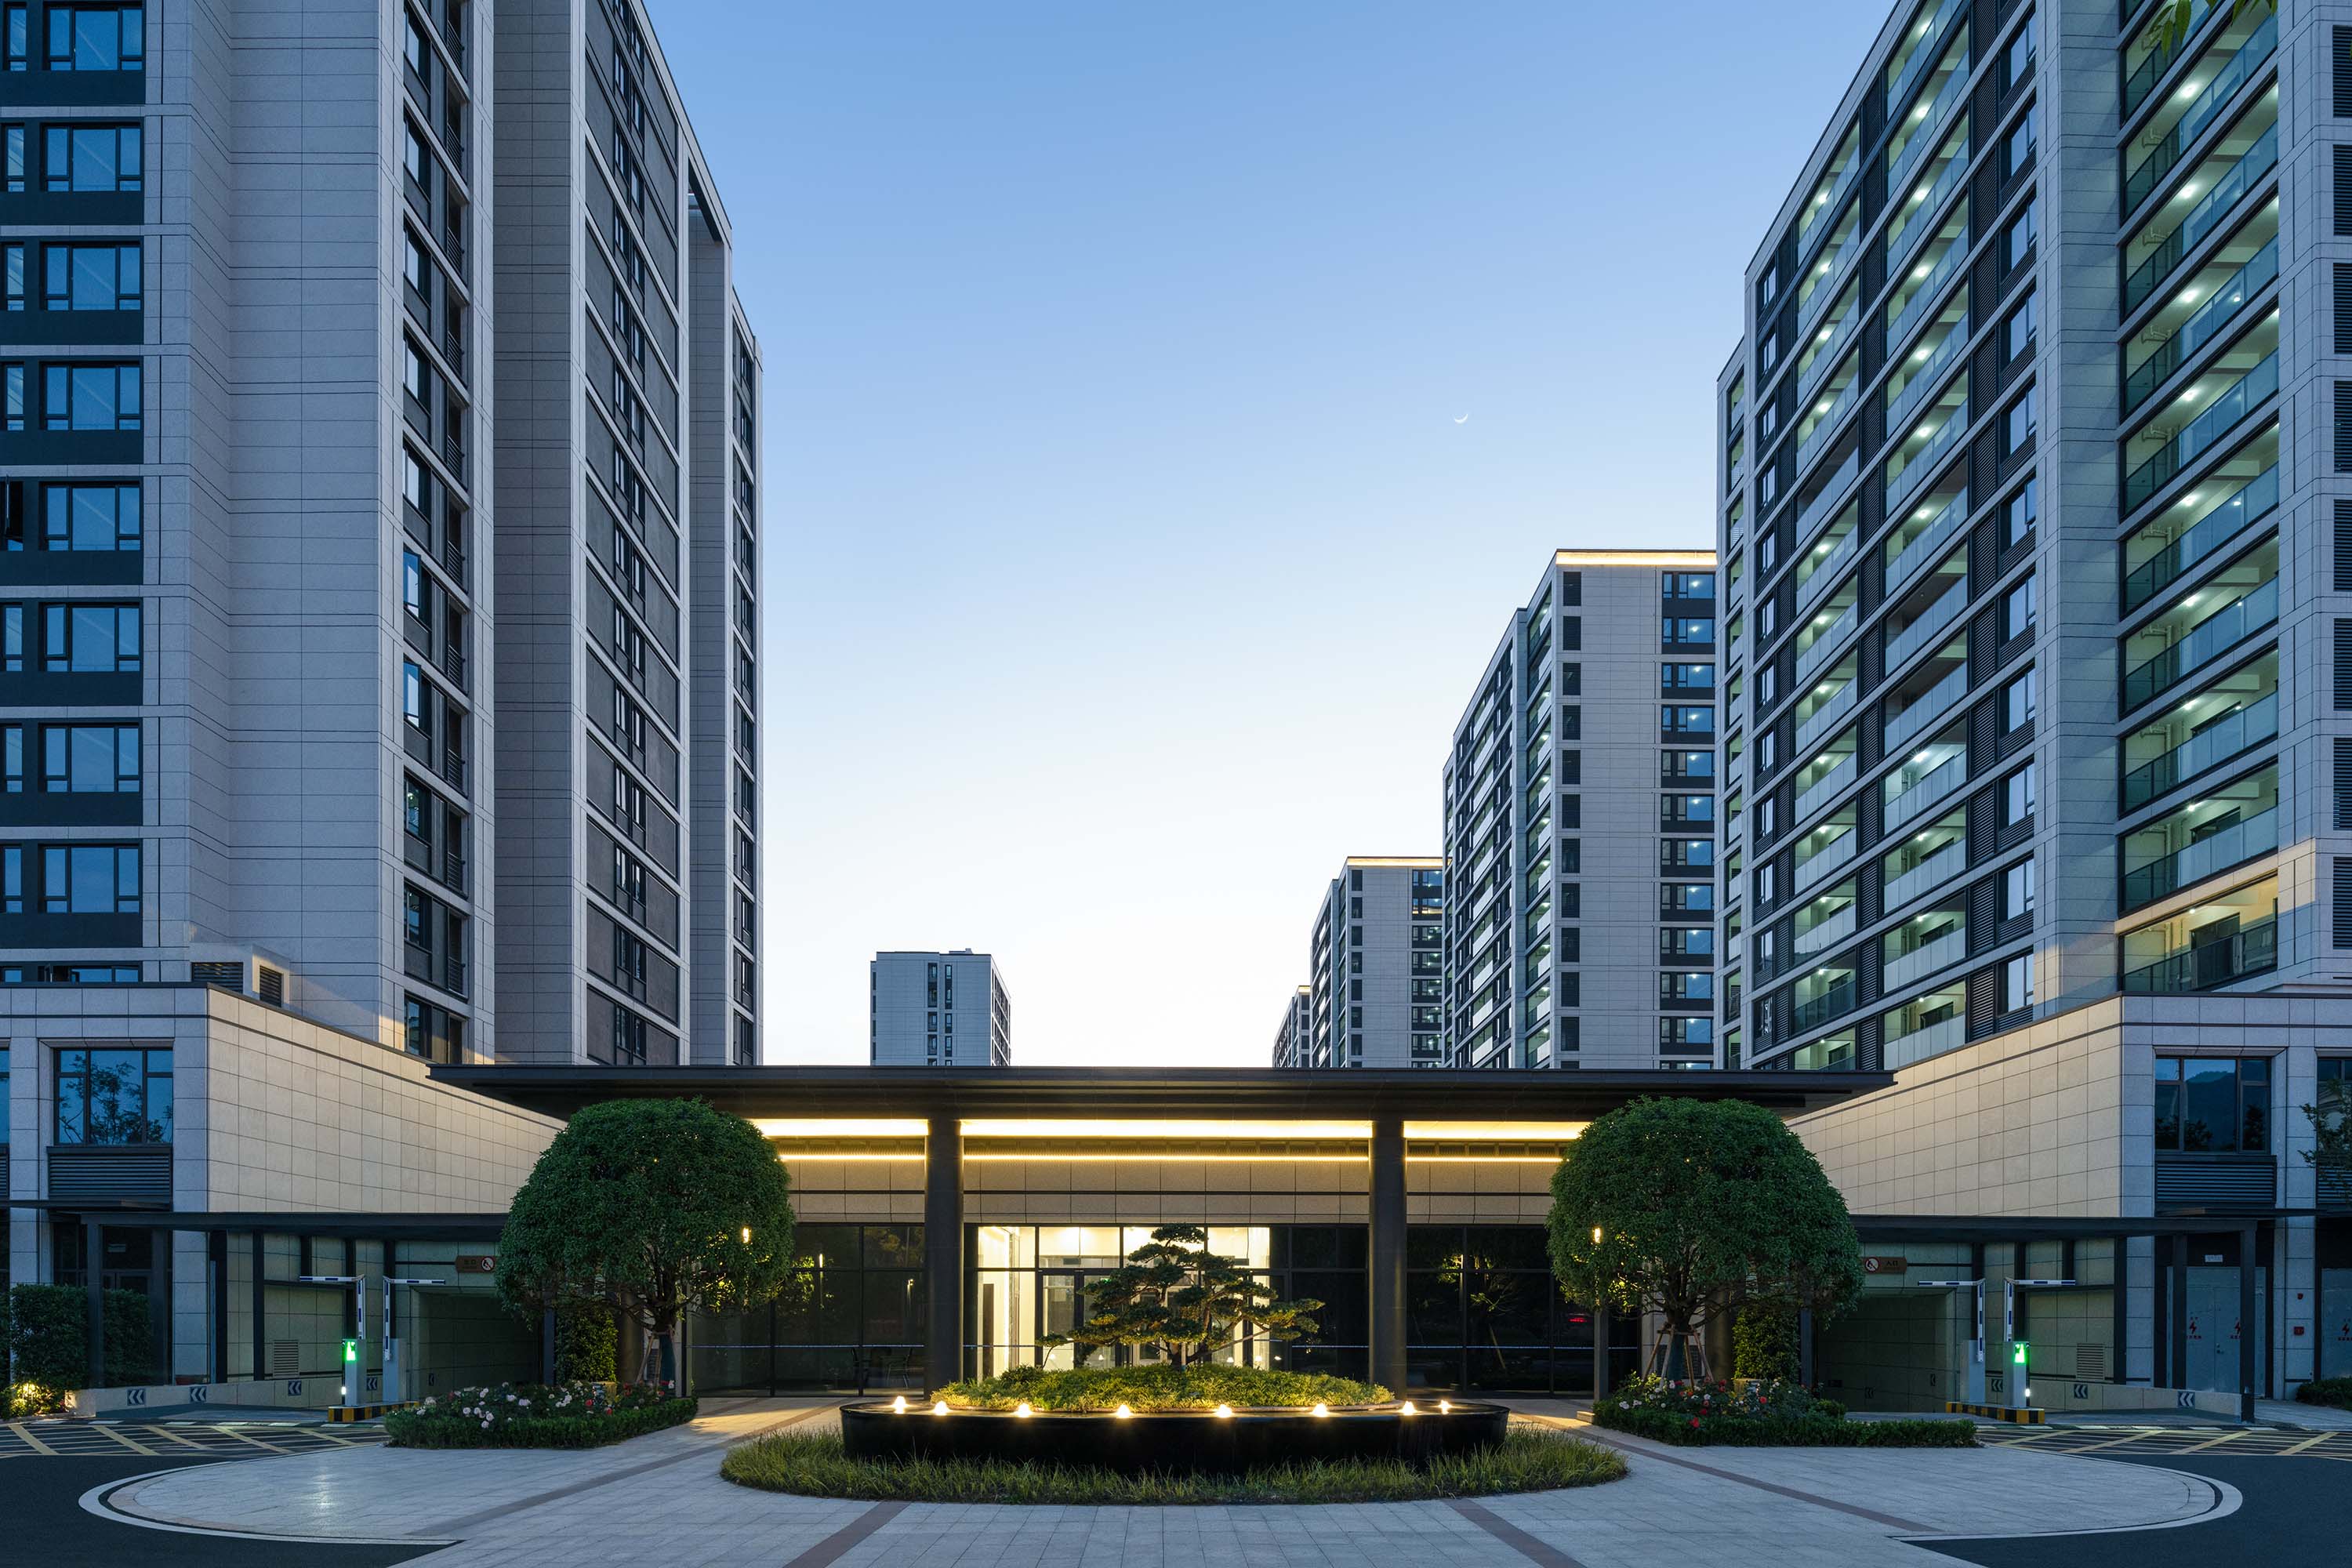 丽水金周农居新社区 | 蓝城蓝鸿设计<br/>  Jinzhou New Community of Residence in Lishui | Bluetown Lanhong Design